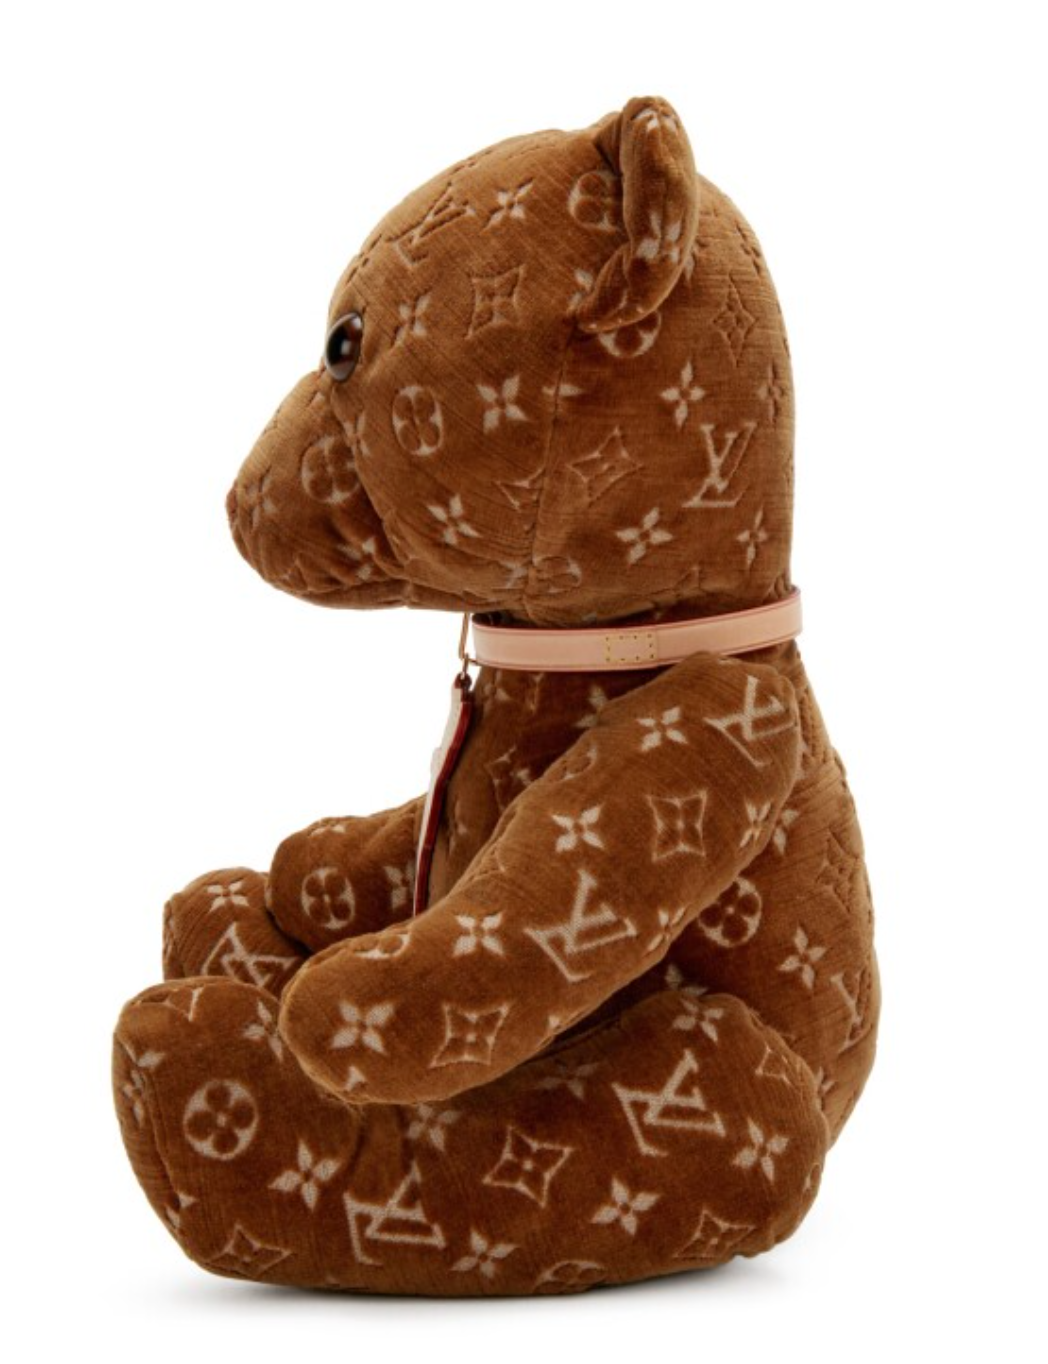 LOUIS VUITTON Monogram Teddy Bear Dou Dou Dudu Limited 026 / 500 M99000